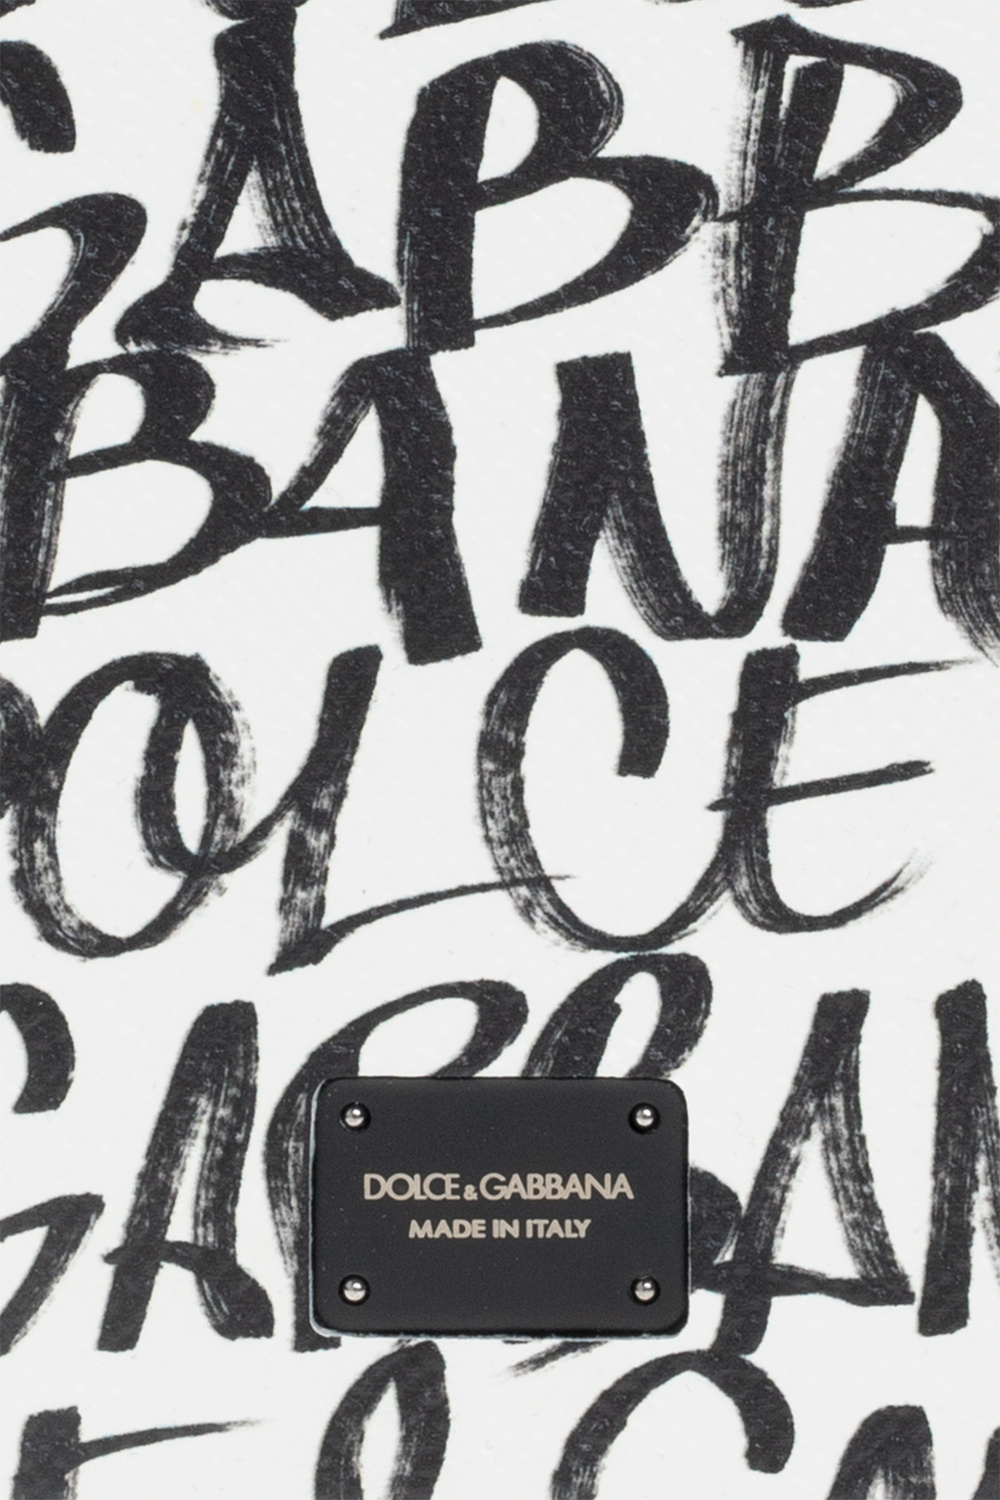 Dolce&gabbana Dg Amore Crossbody Bags iPhone 12 Pro Max case